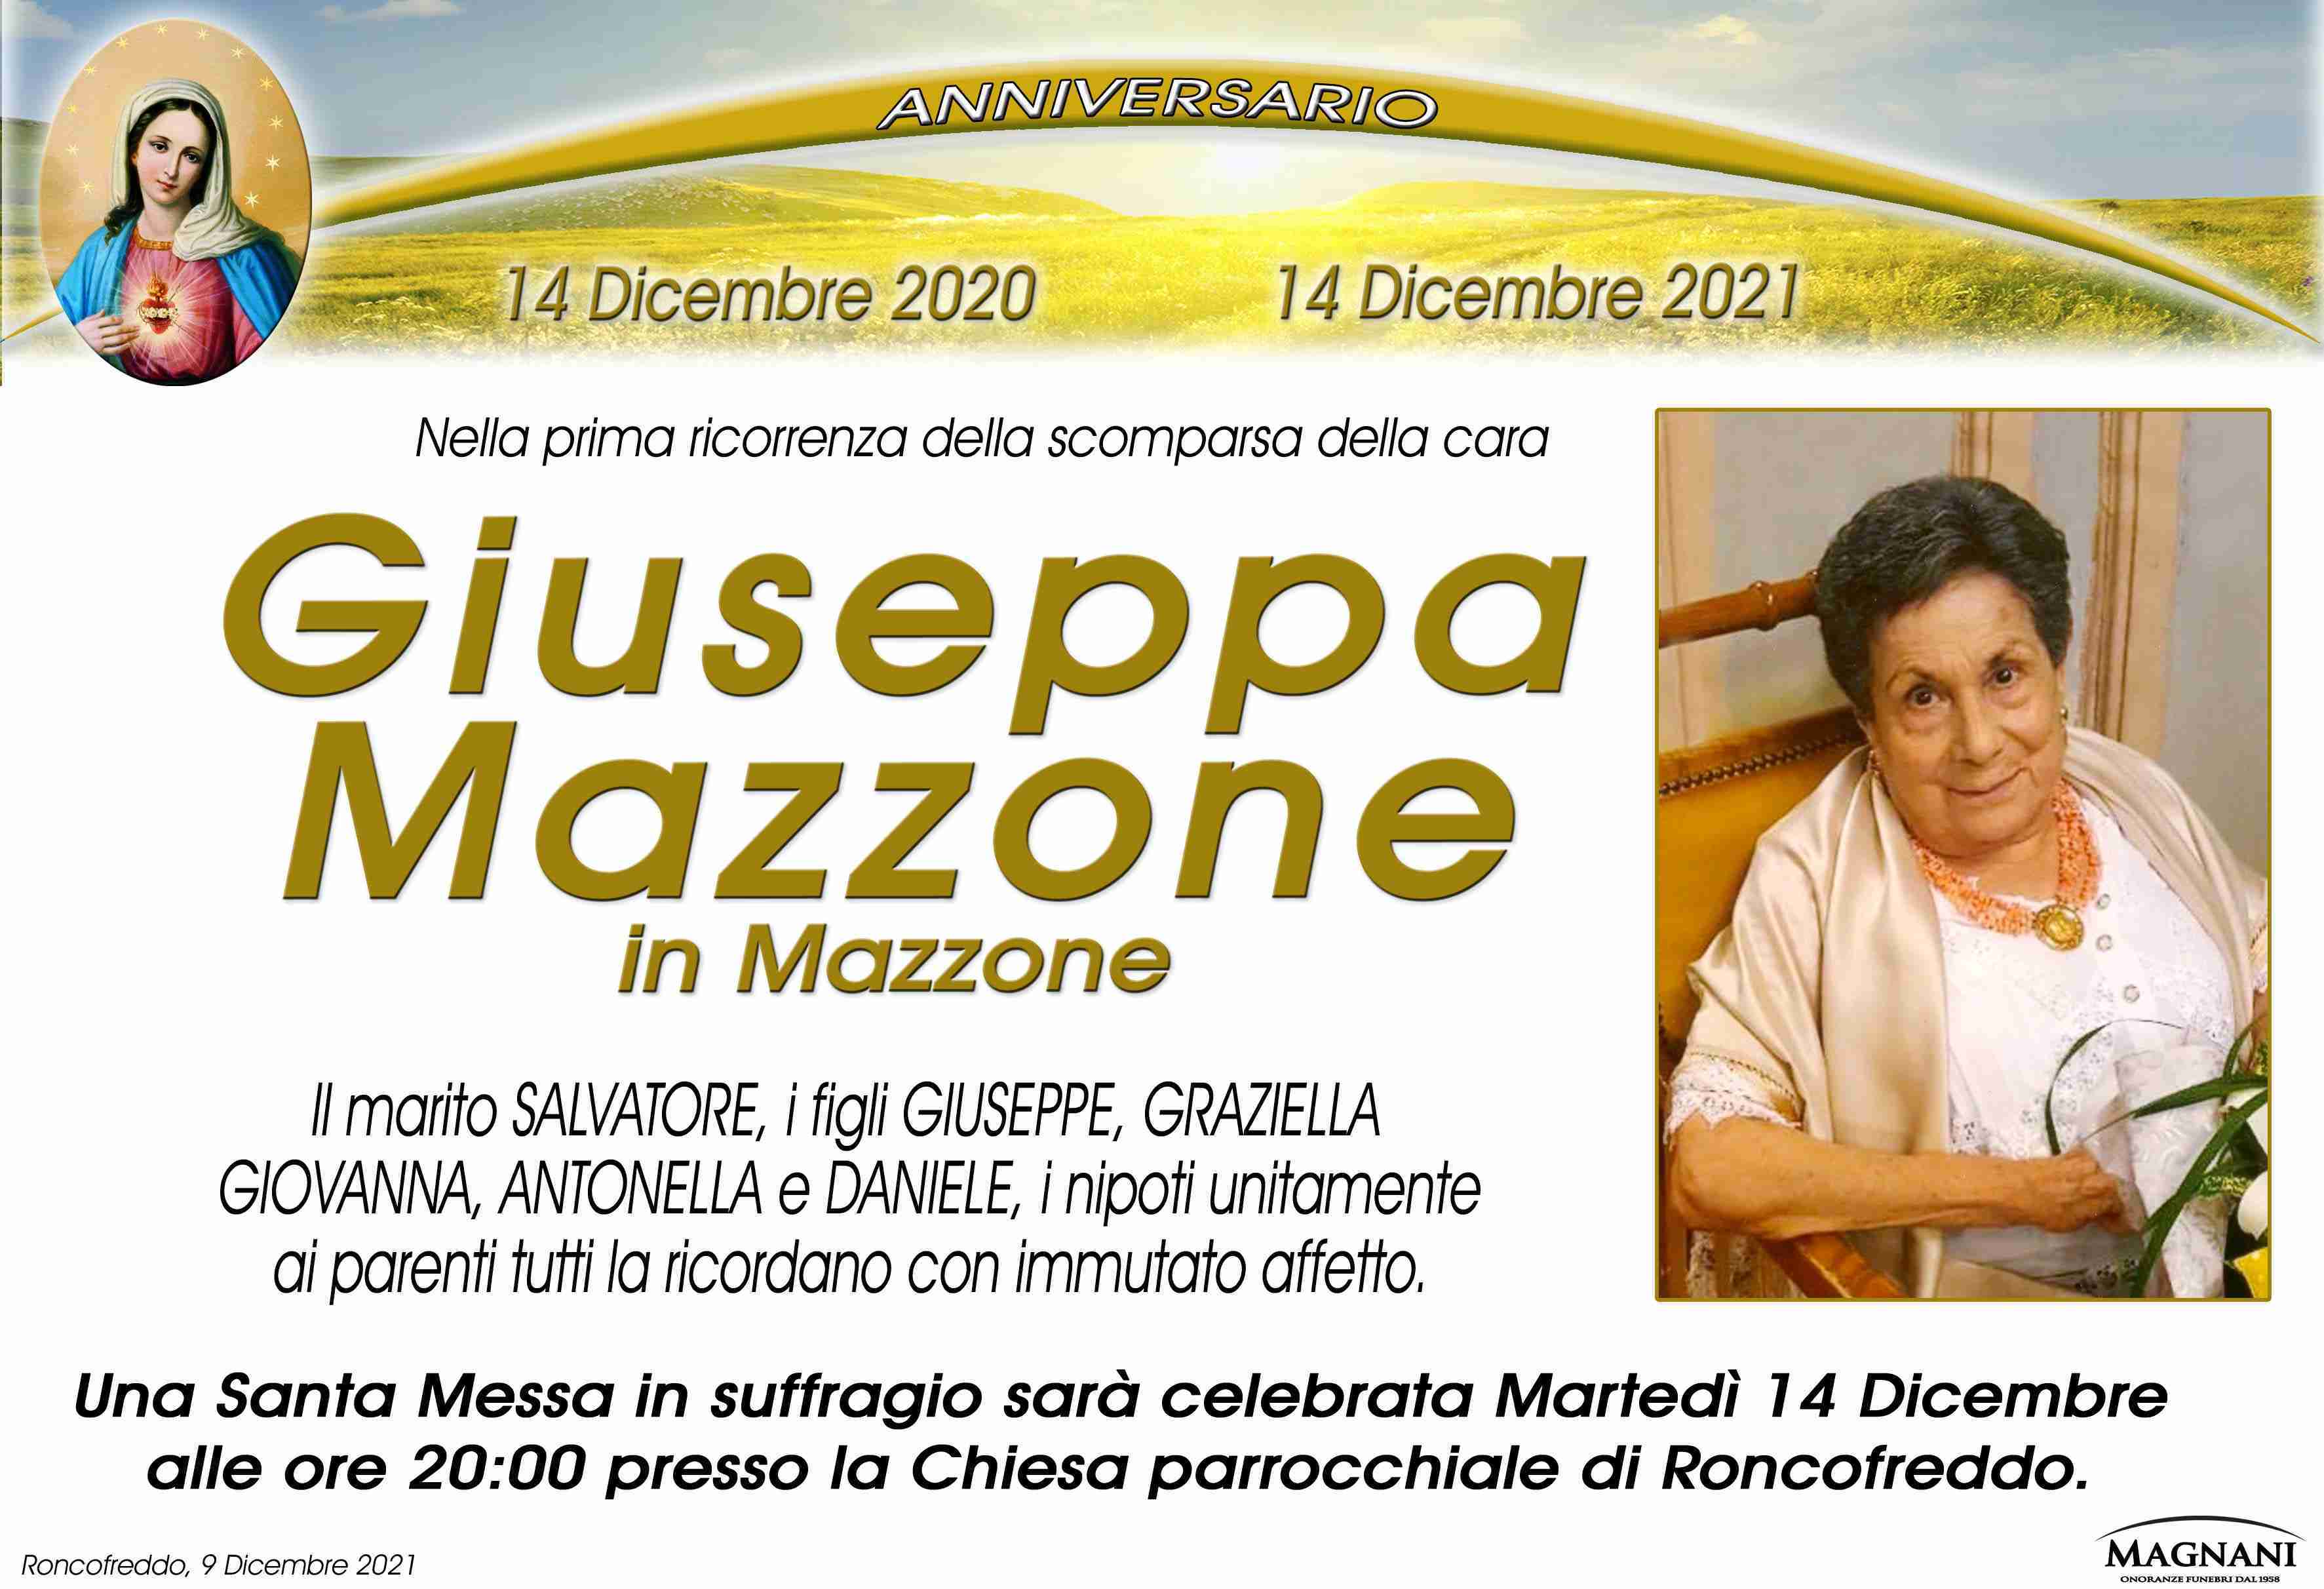 Giuseppa Mazzone